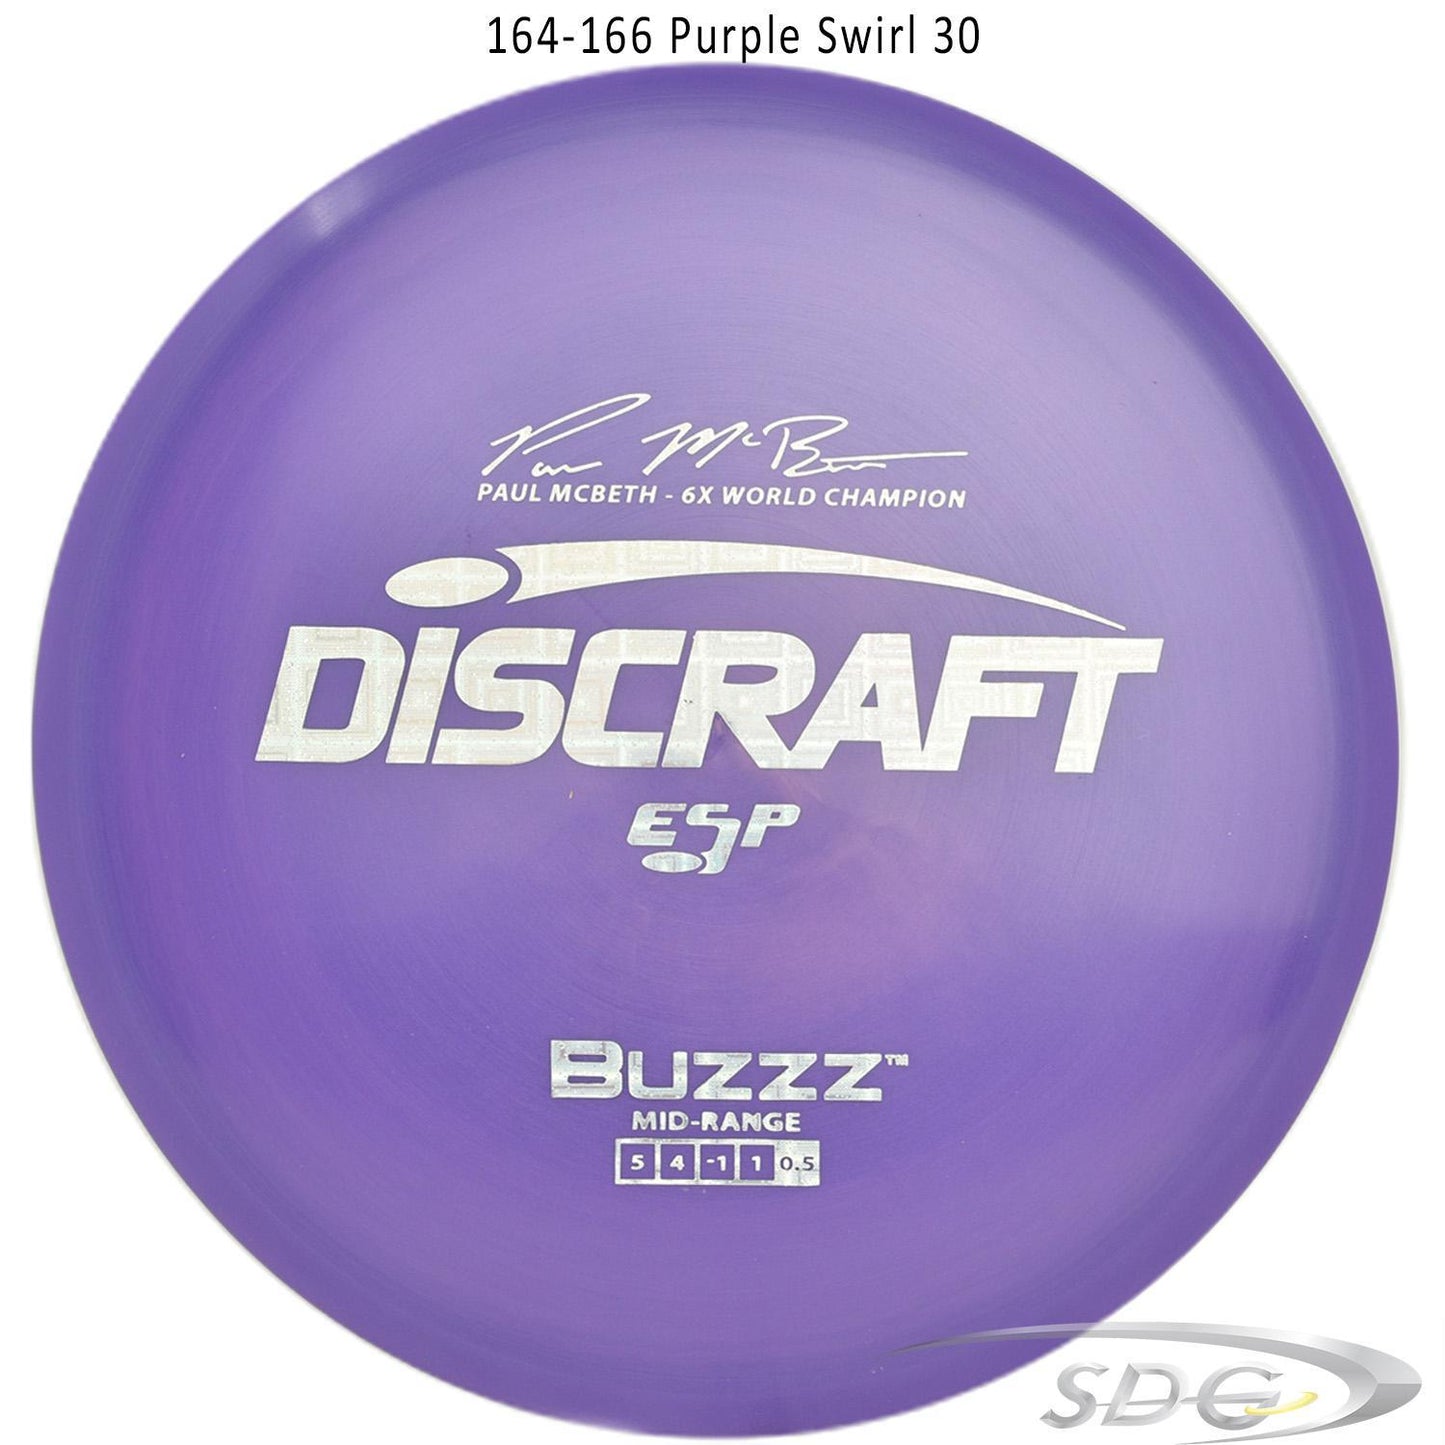 discraft-esp-buzzz-6x-paul-mcbeth-signature-series-disc-golf-mid-range 164-166 Purple Swirl 30